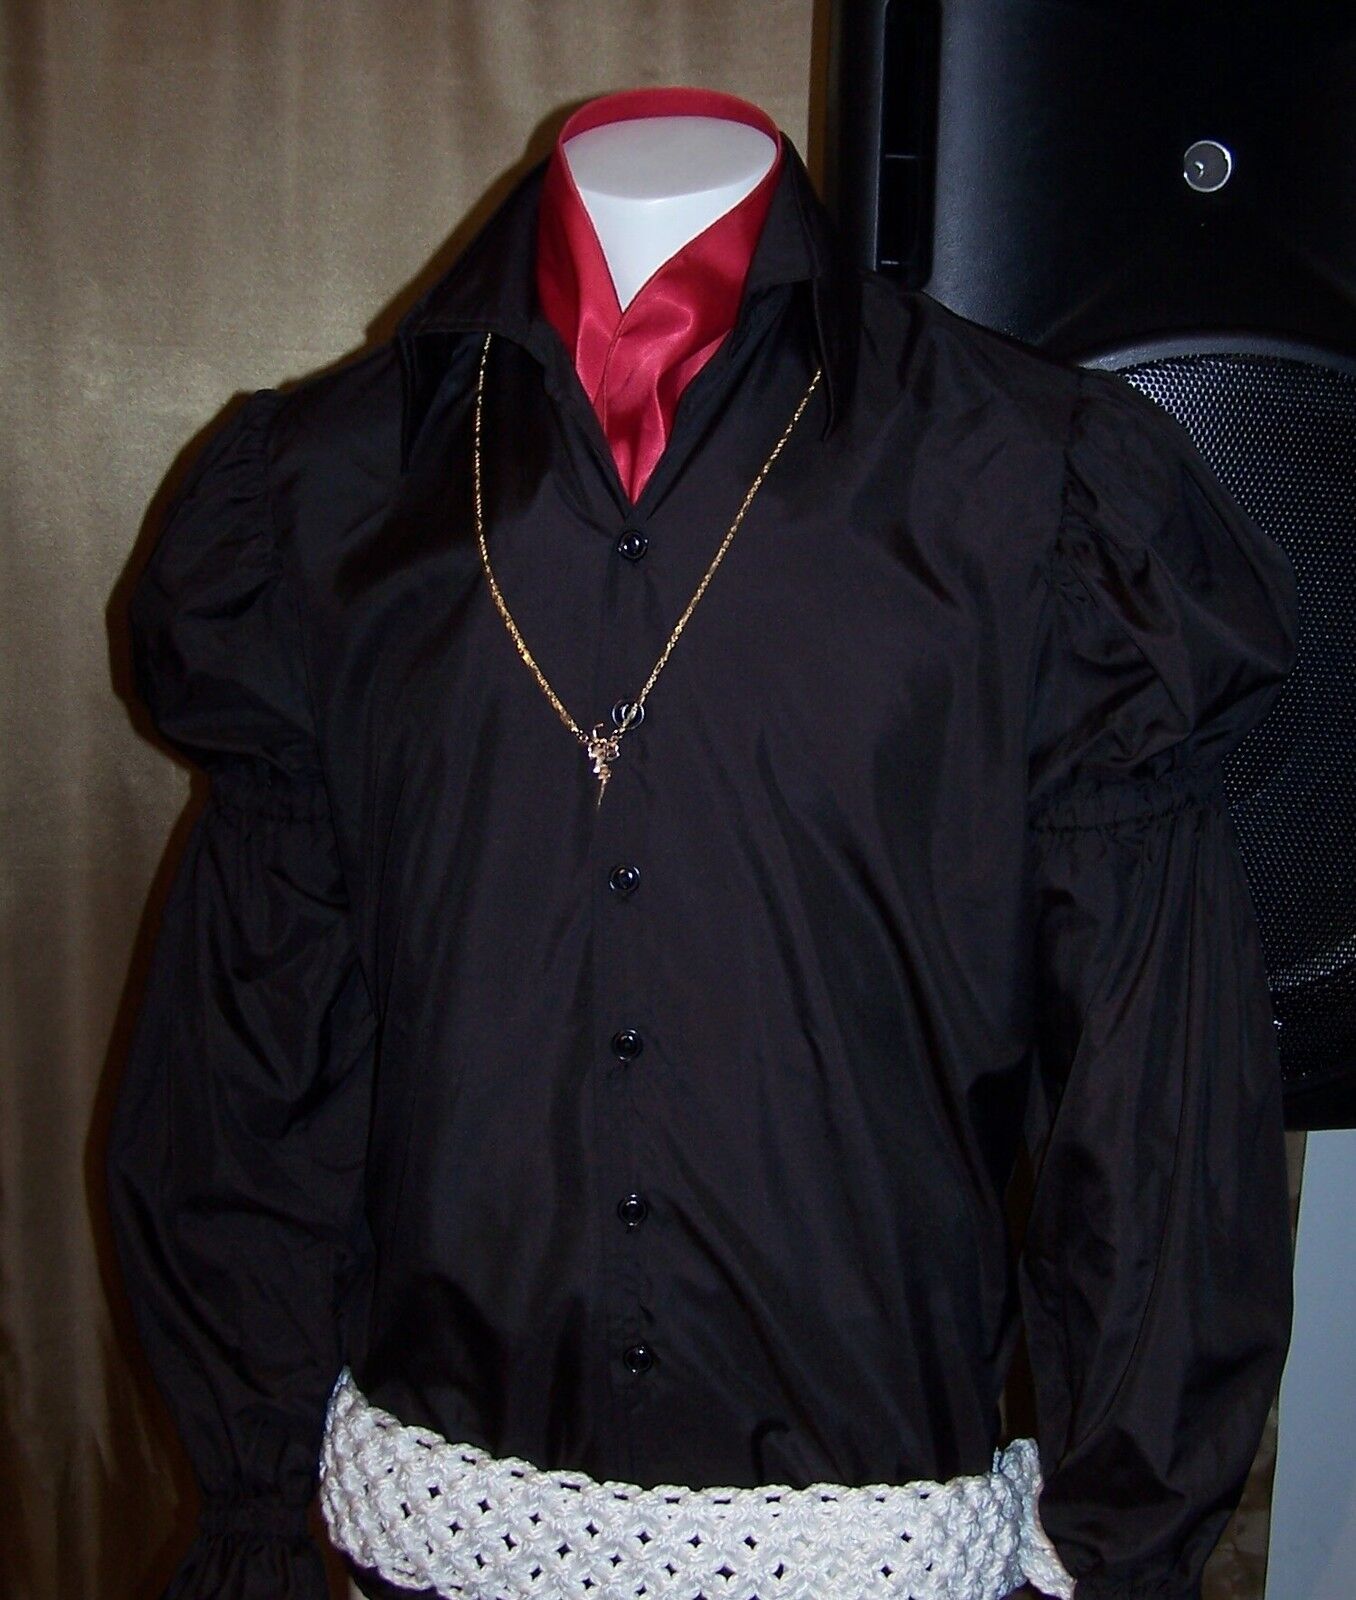 ELVIS PRESLEY owned & worn 1970 Black Puffy Sleeve Shirt from Vernon Presley